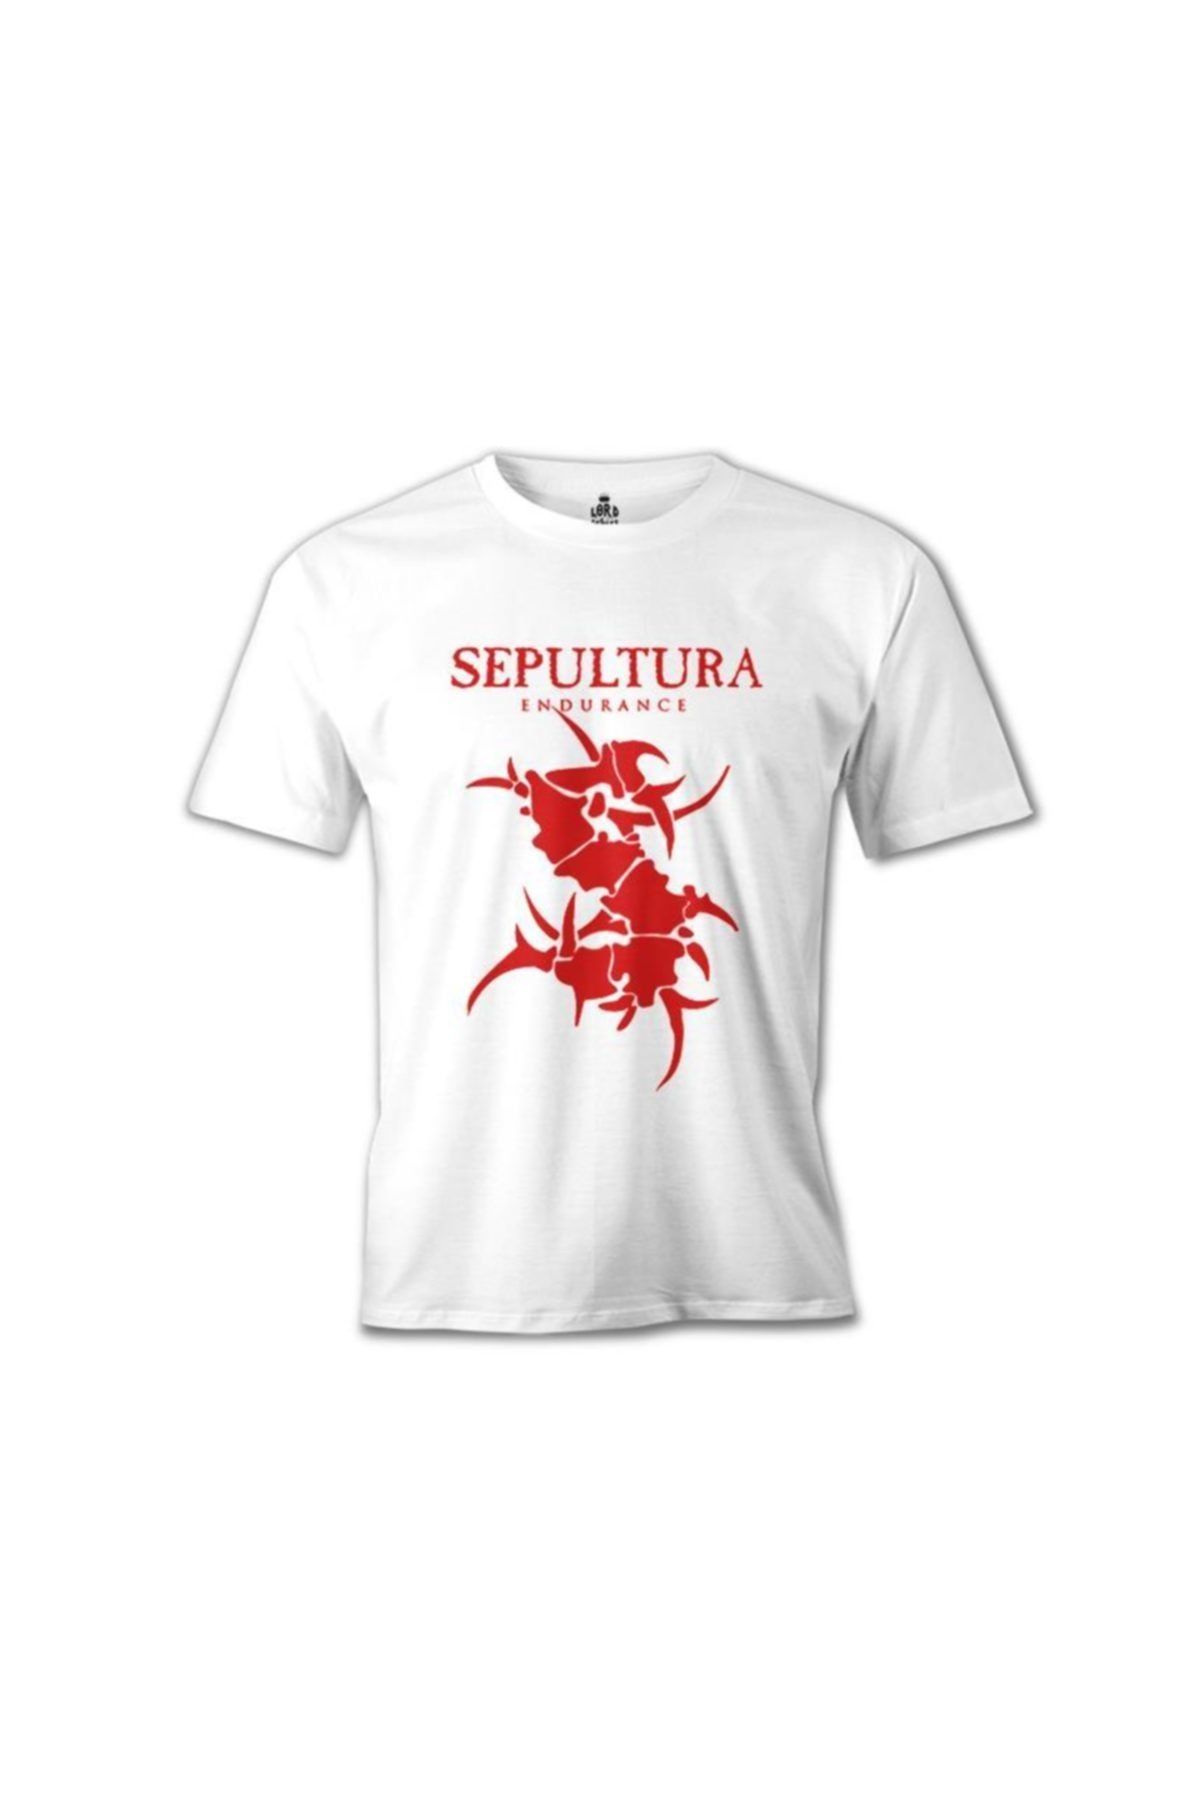 Lord T-Shirt Sepultura - Endurance Logo Red Beyaz Erkek Tshirt